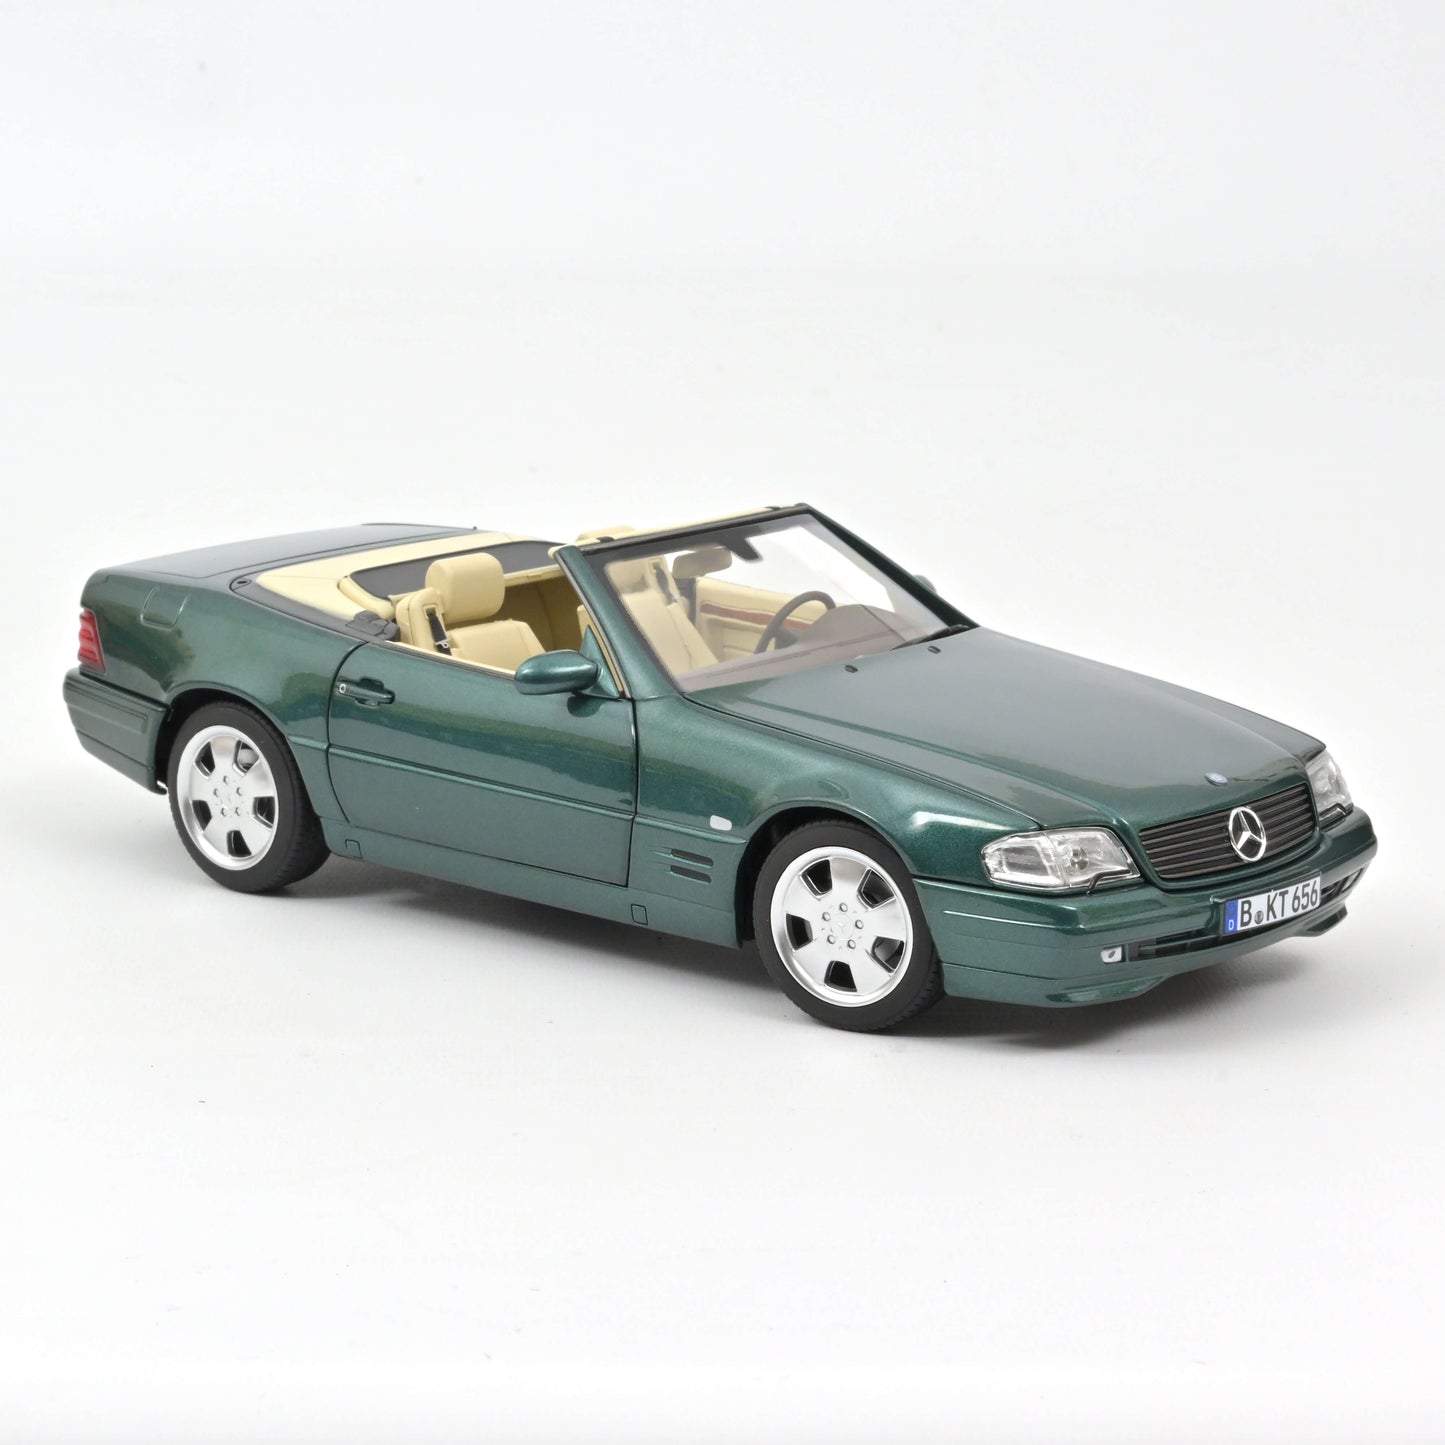 1:18 Mercedes-Benz SL500 R129, 1999, grønmetallic, Norev 183753, åben model